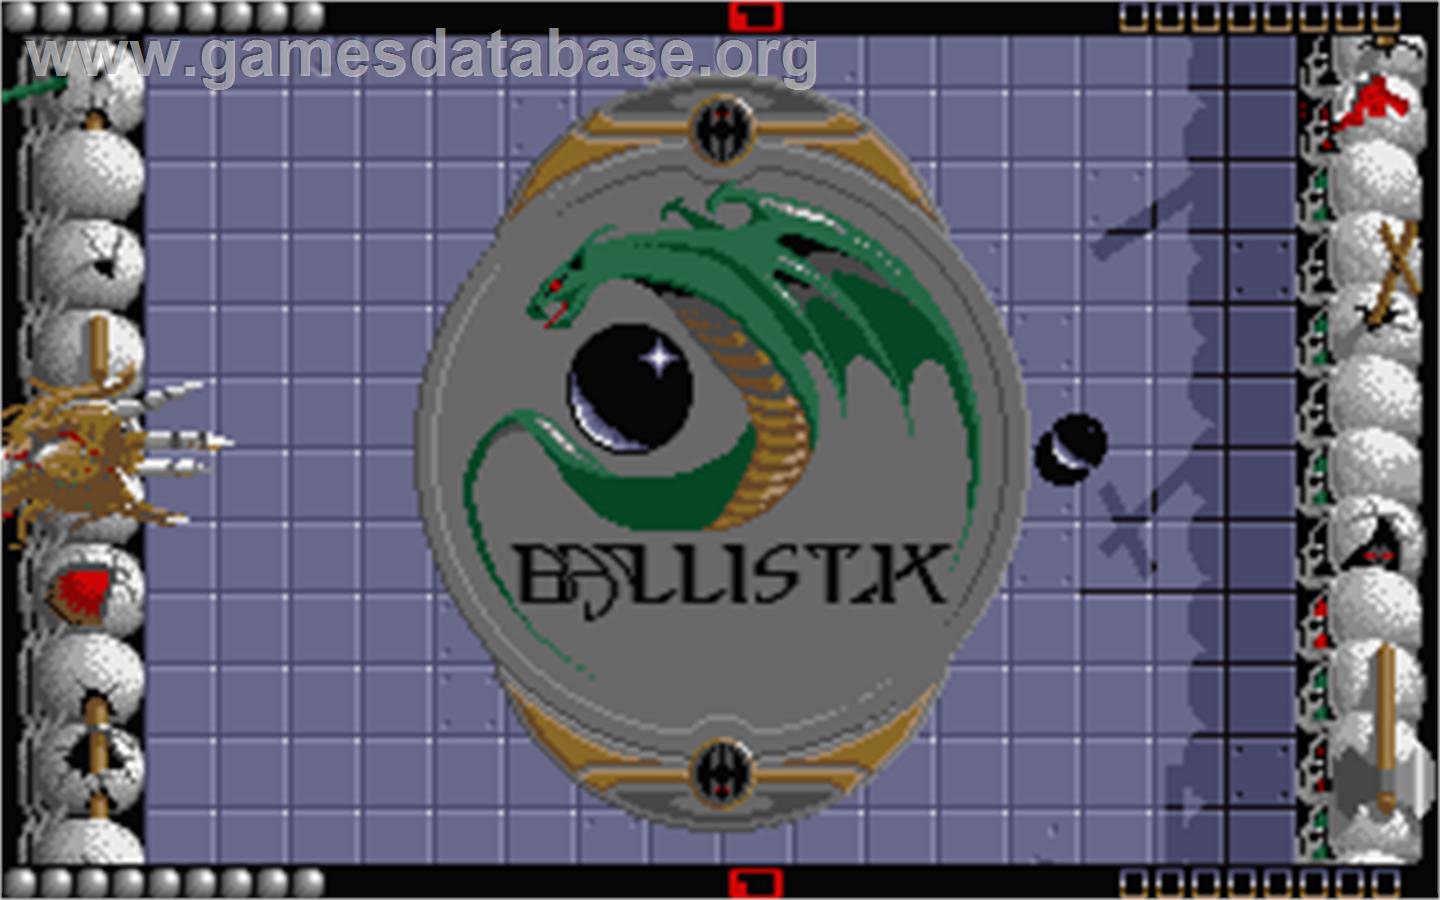 Ballistix - Atari ST - Artwork - In Game